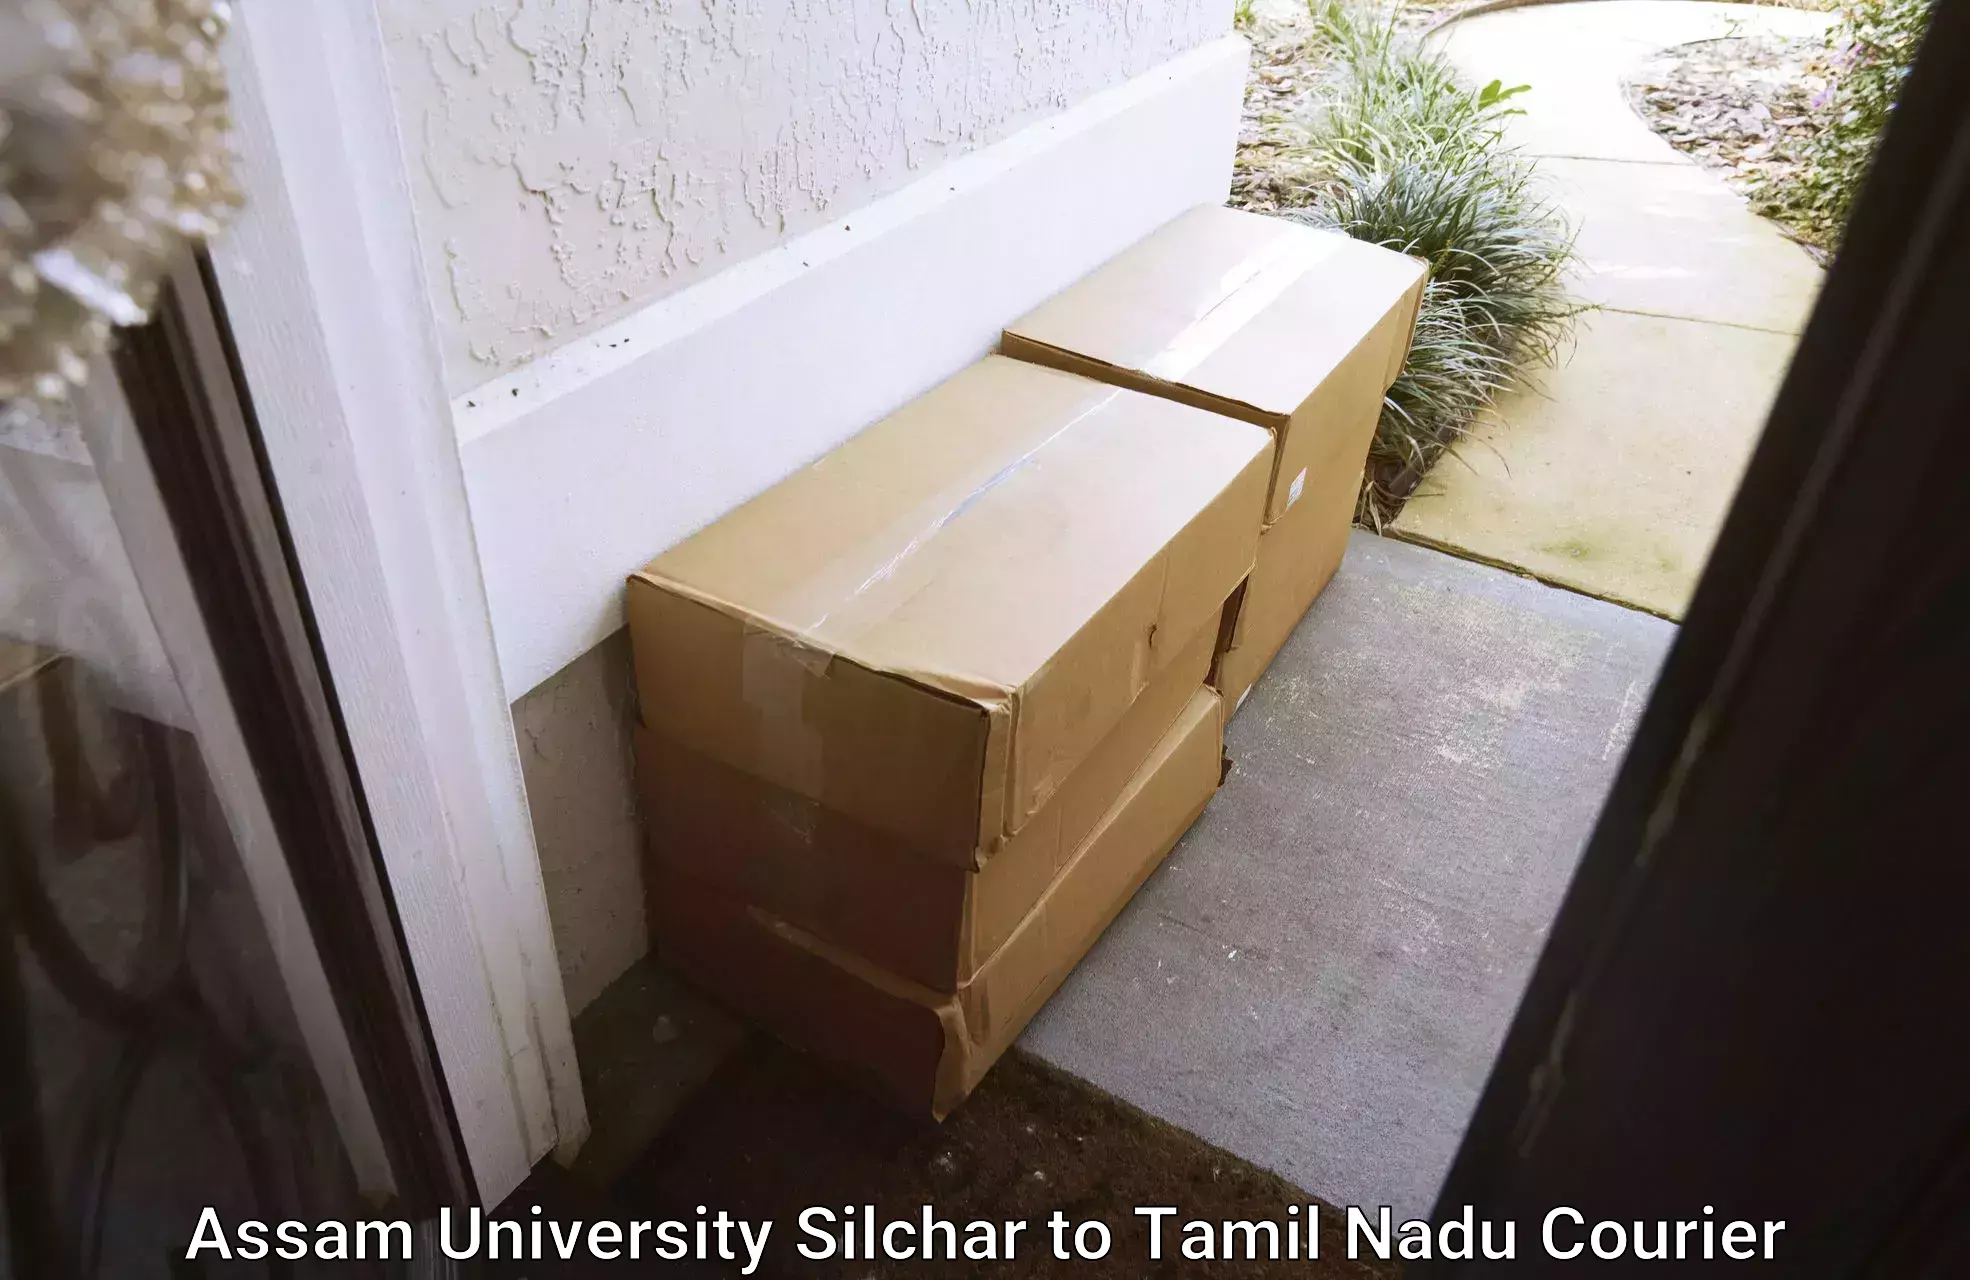 Custom courier packaging Assam University Silchar to Thiruporur